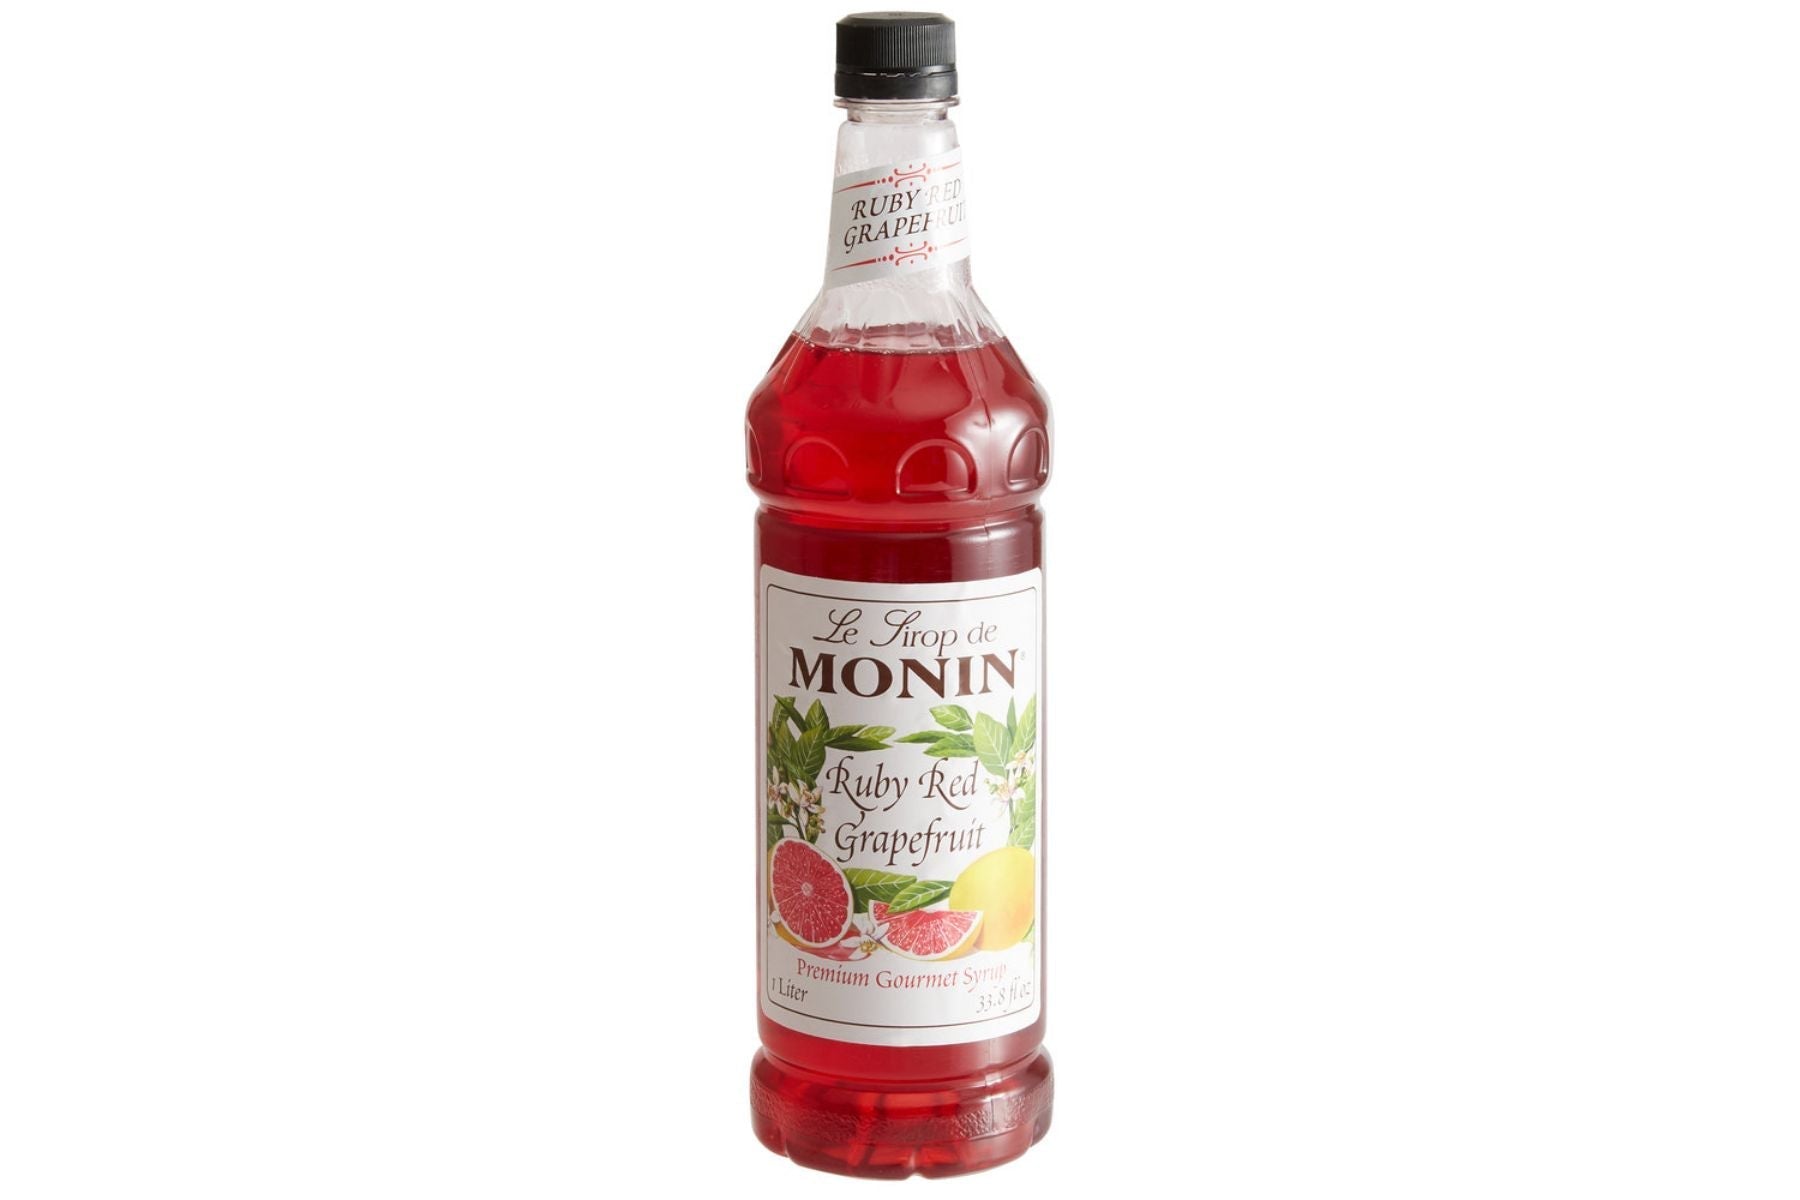 Monin Classic Syrup - 1L Plastic Bottle: Ruby Red Grapefruit